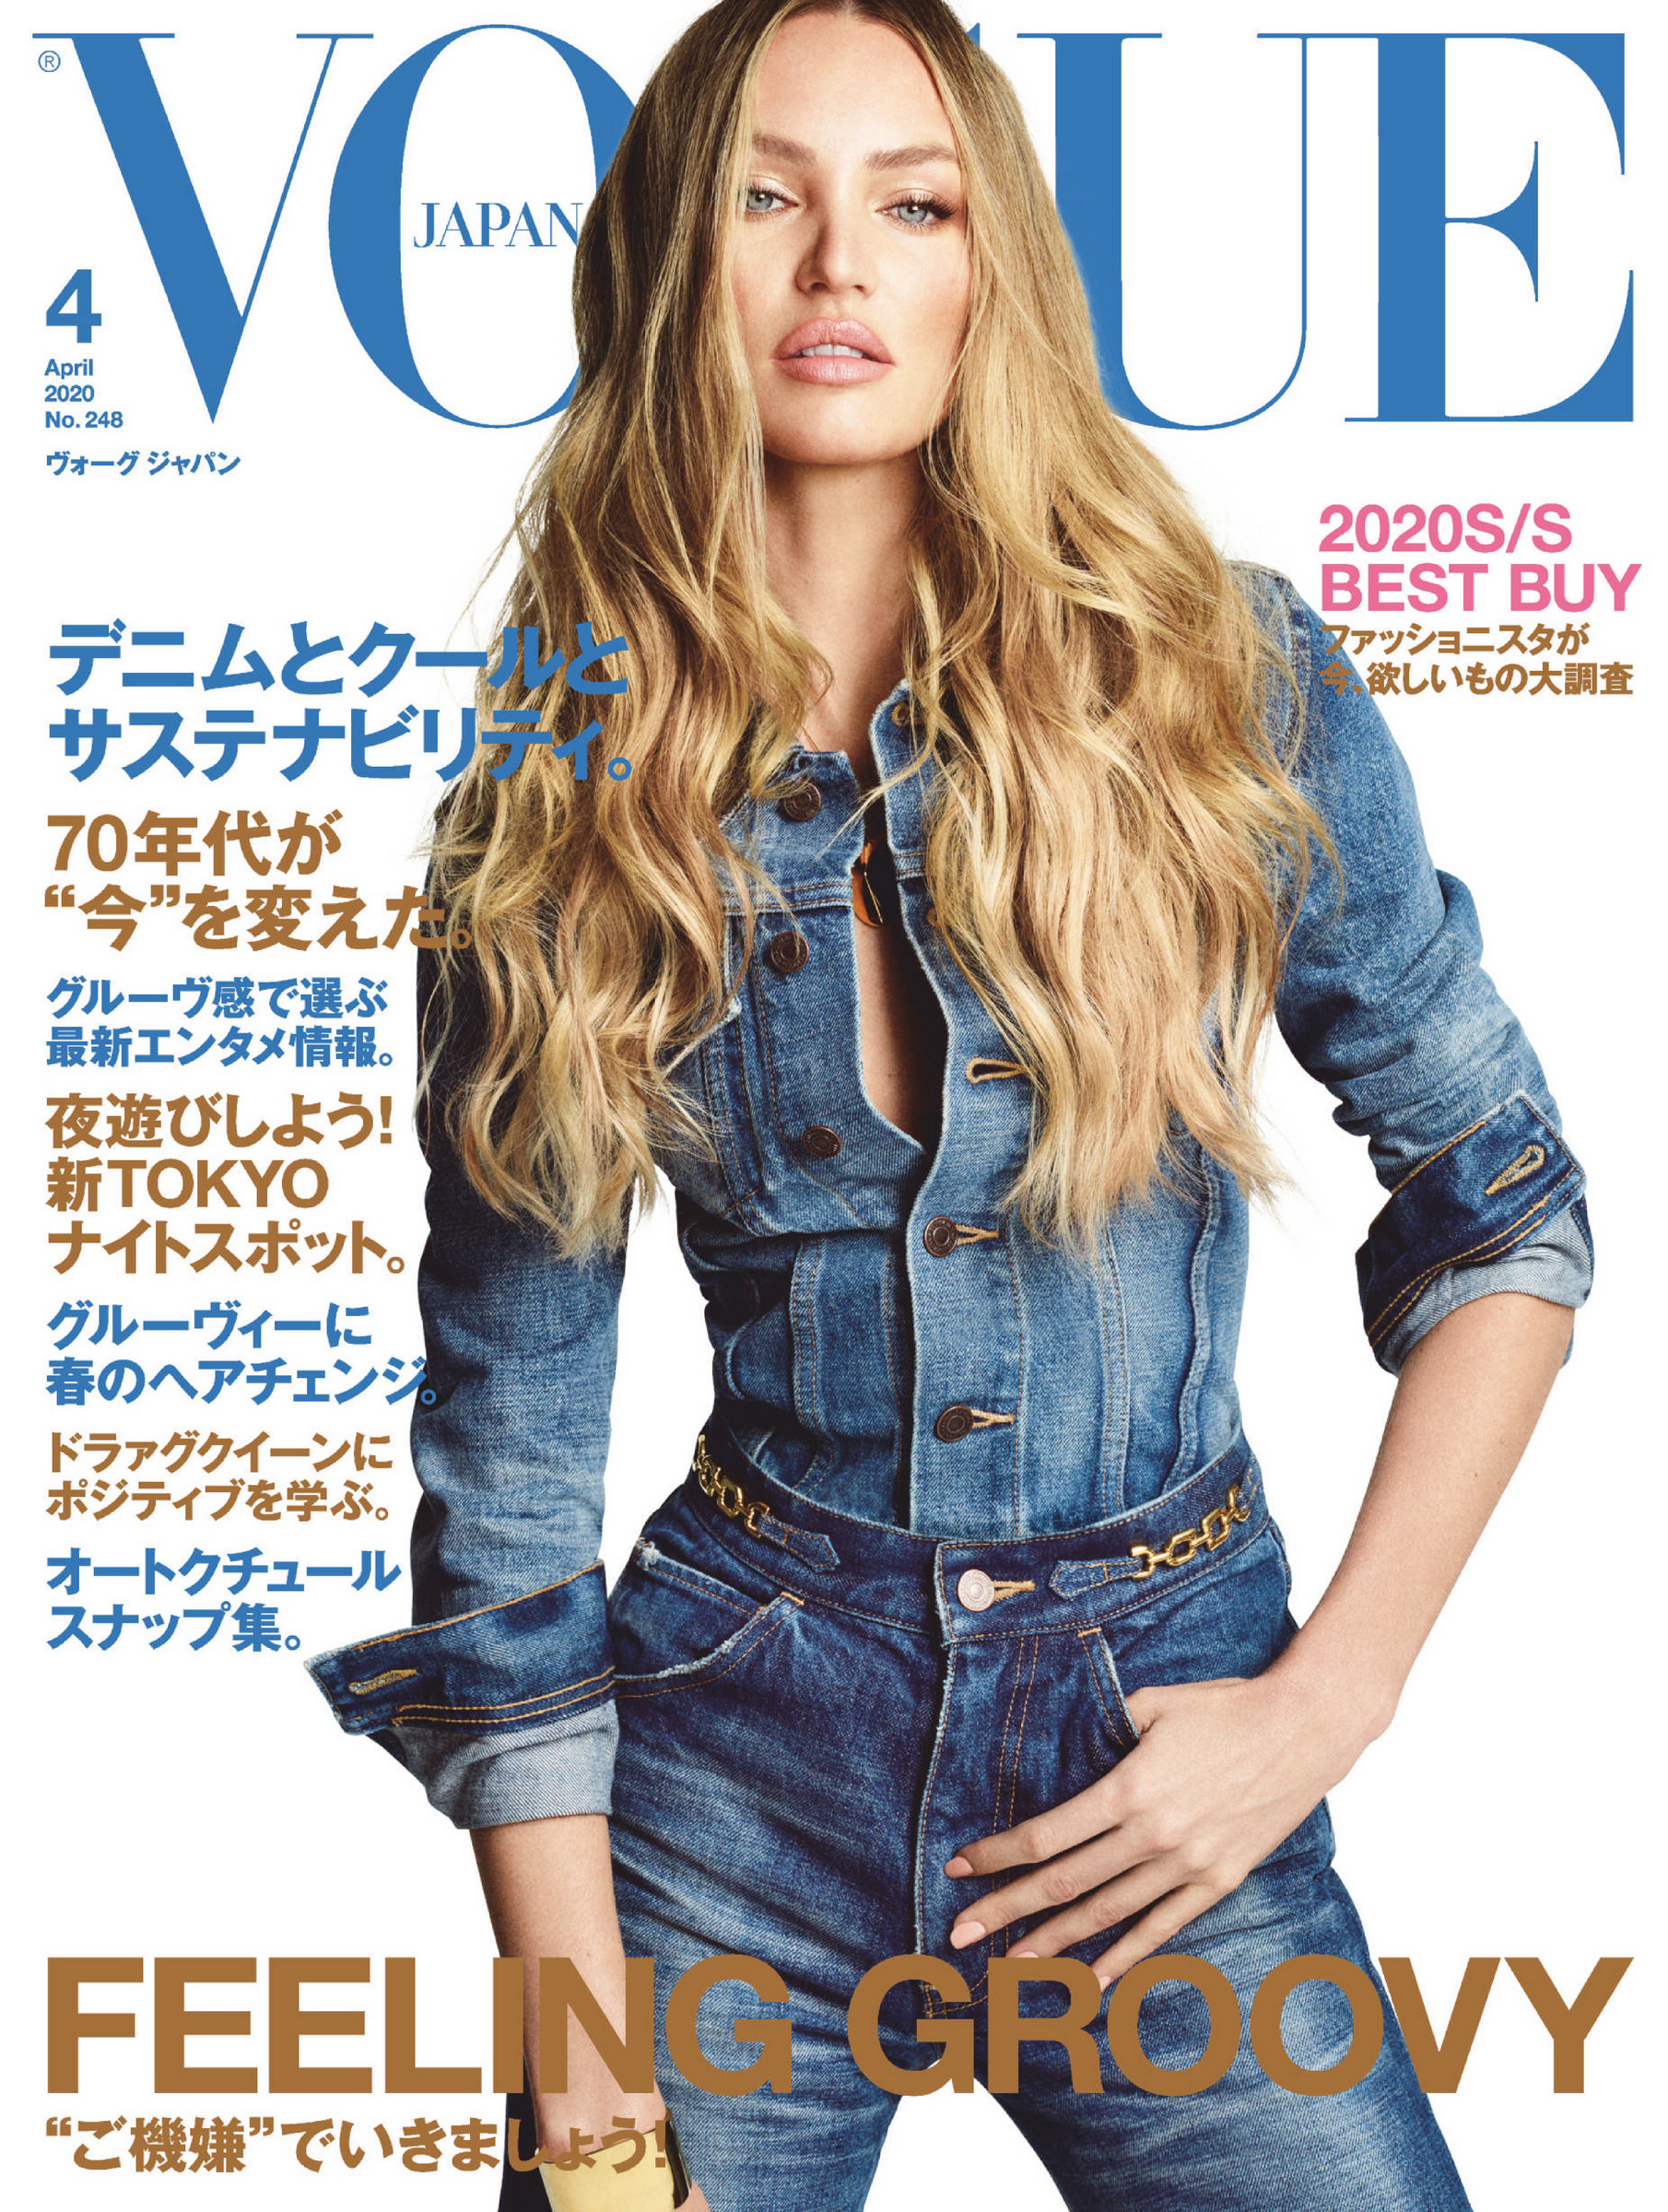 Topless Models in Denim for Vogue Japan - Photo 3